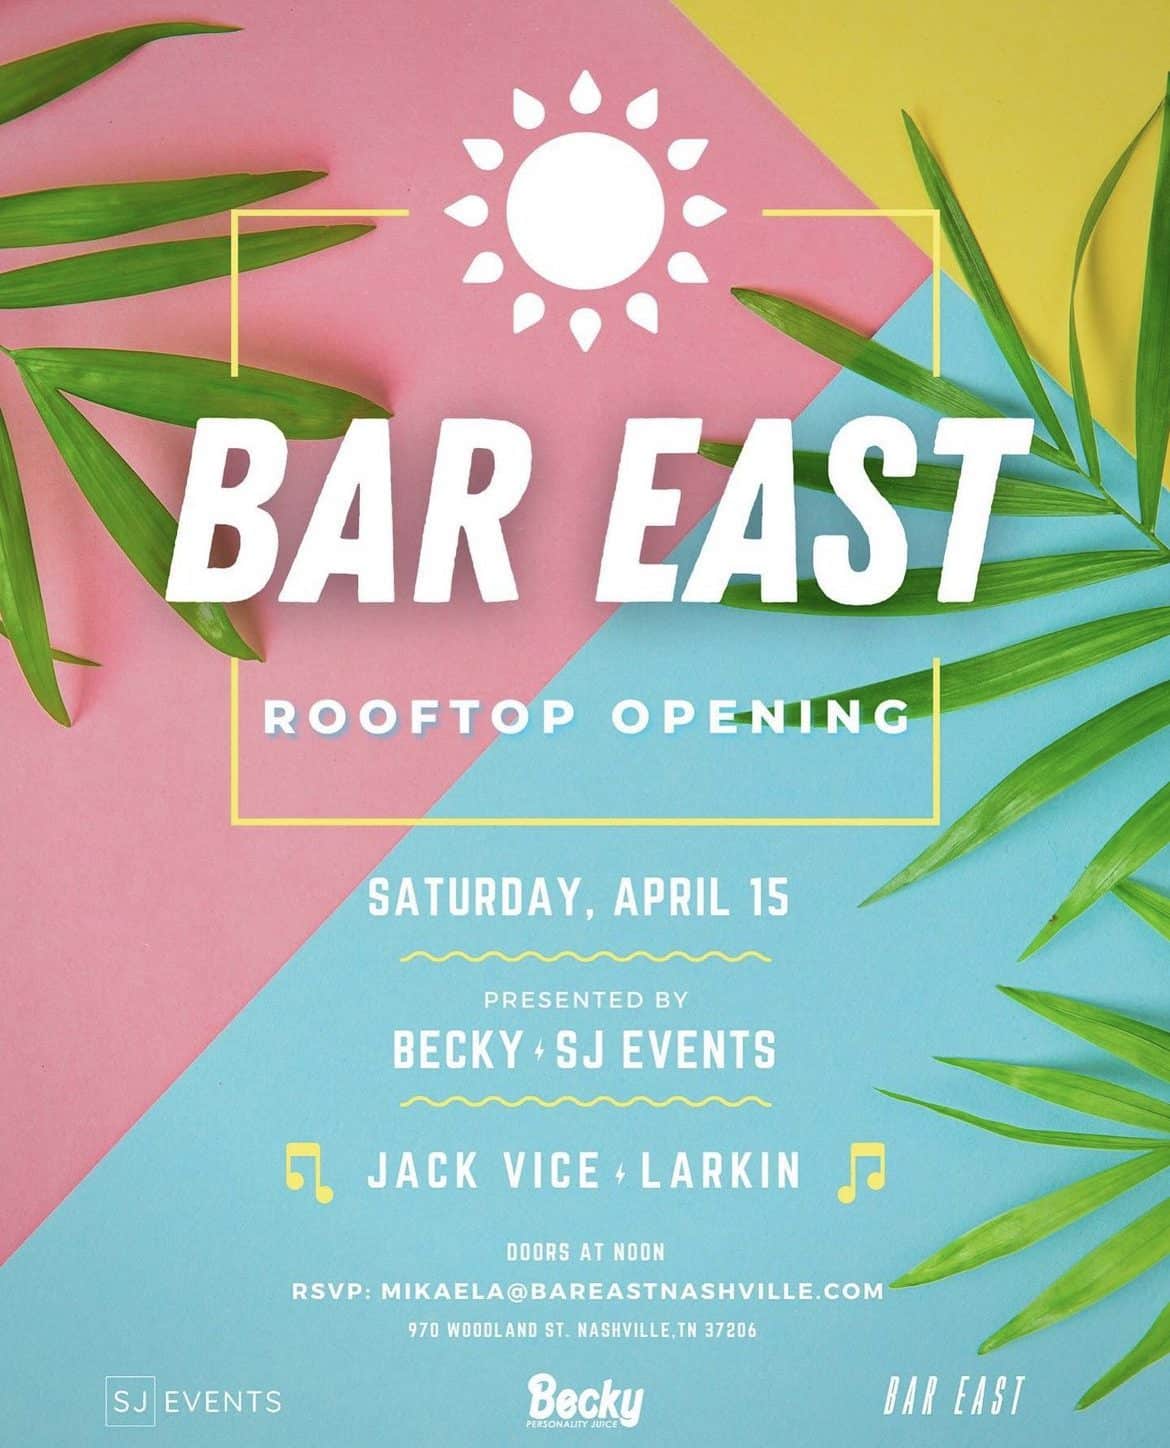 Bar East Rooftop Opening Event Nashville TN